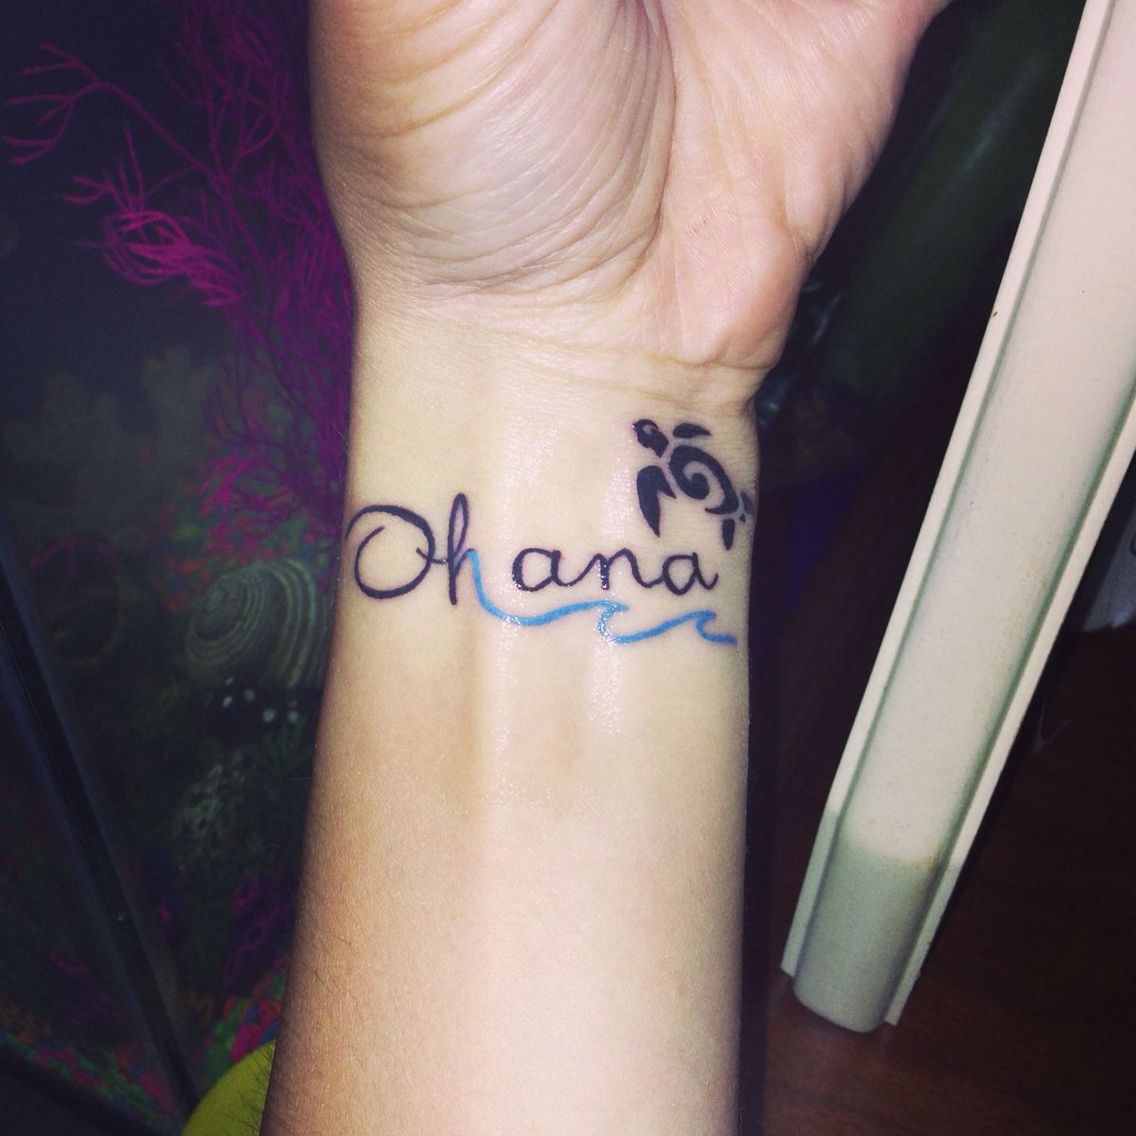 ohana-tattoo-8 - Tattoo Designs for Women